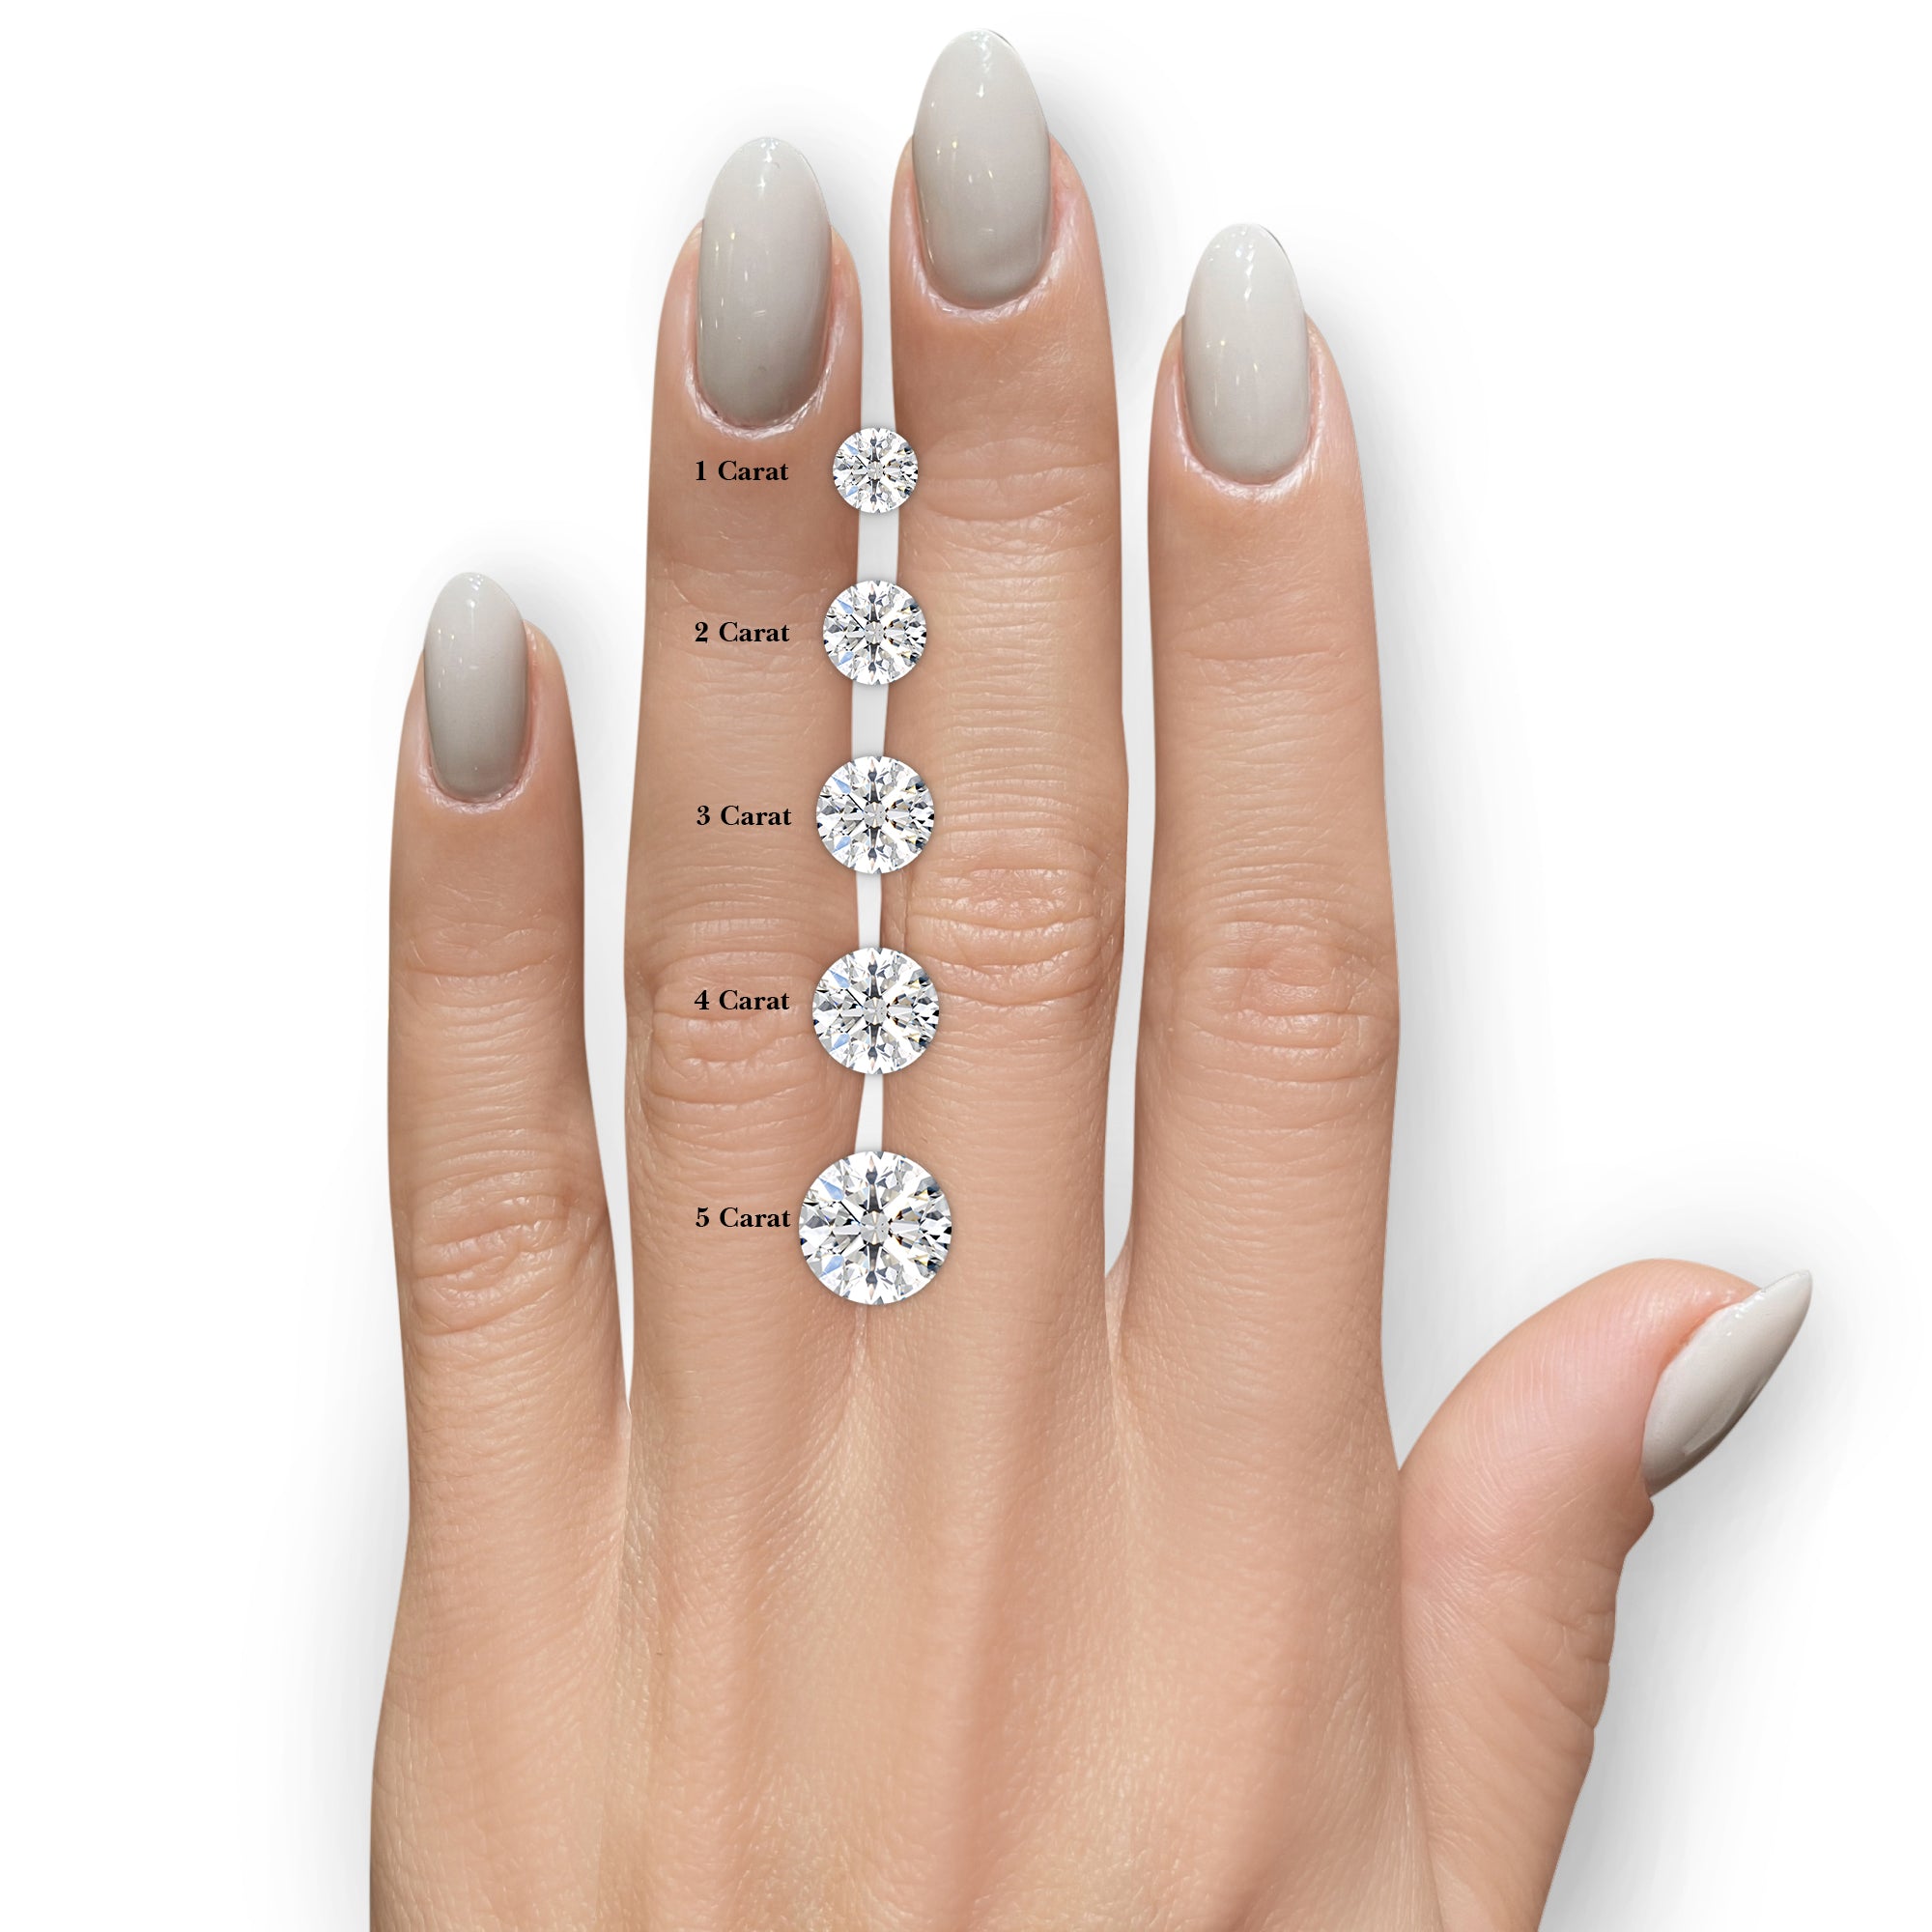 Vivienne Diamond Engagement Ring - 14K Rose Gold